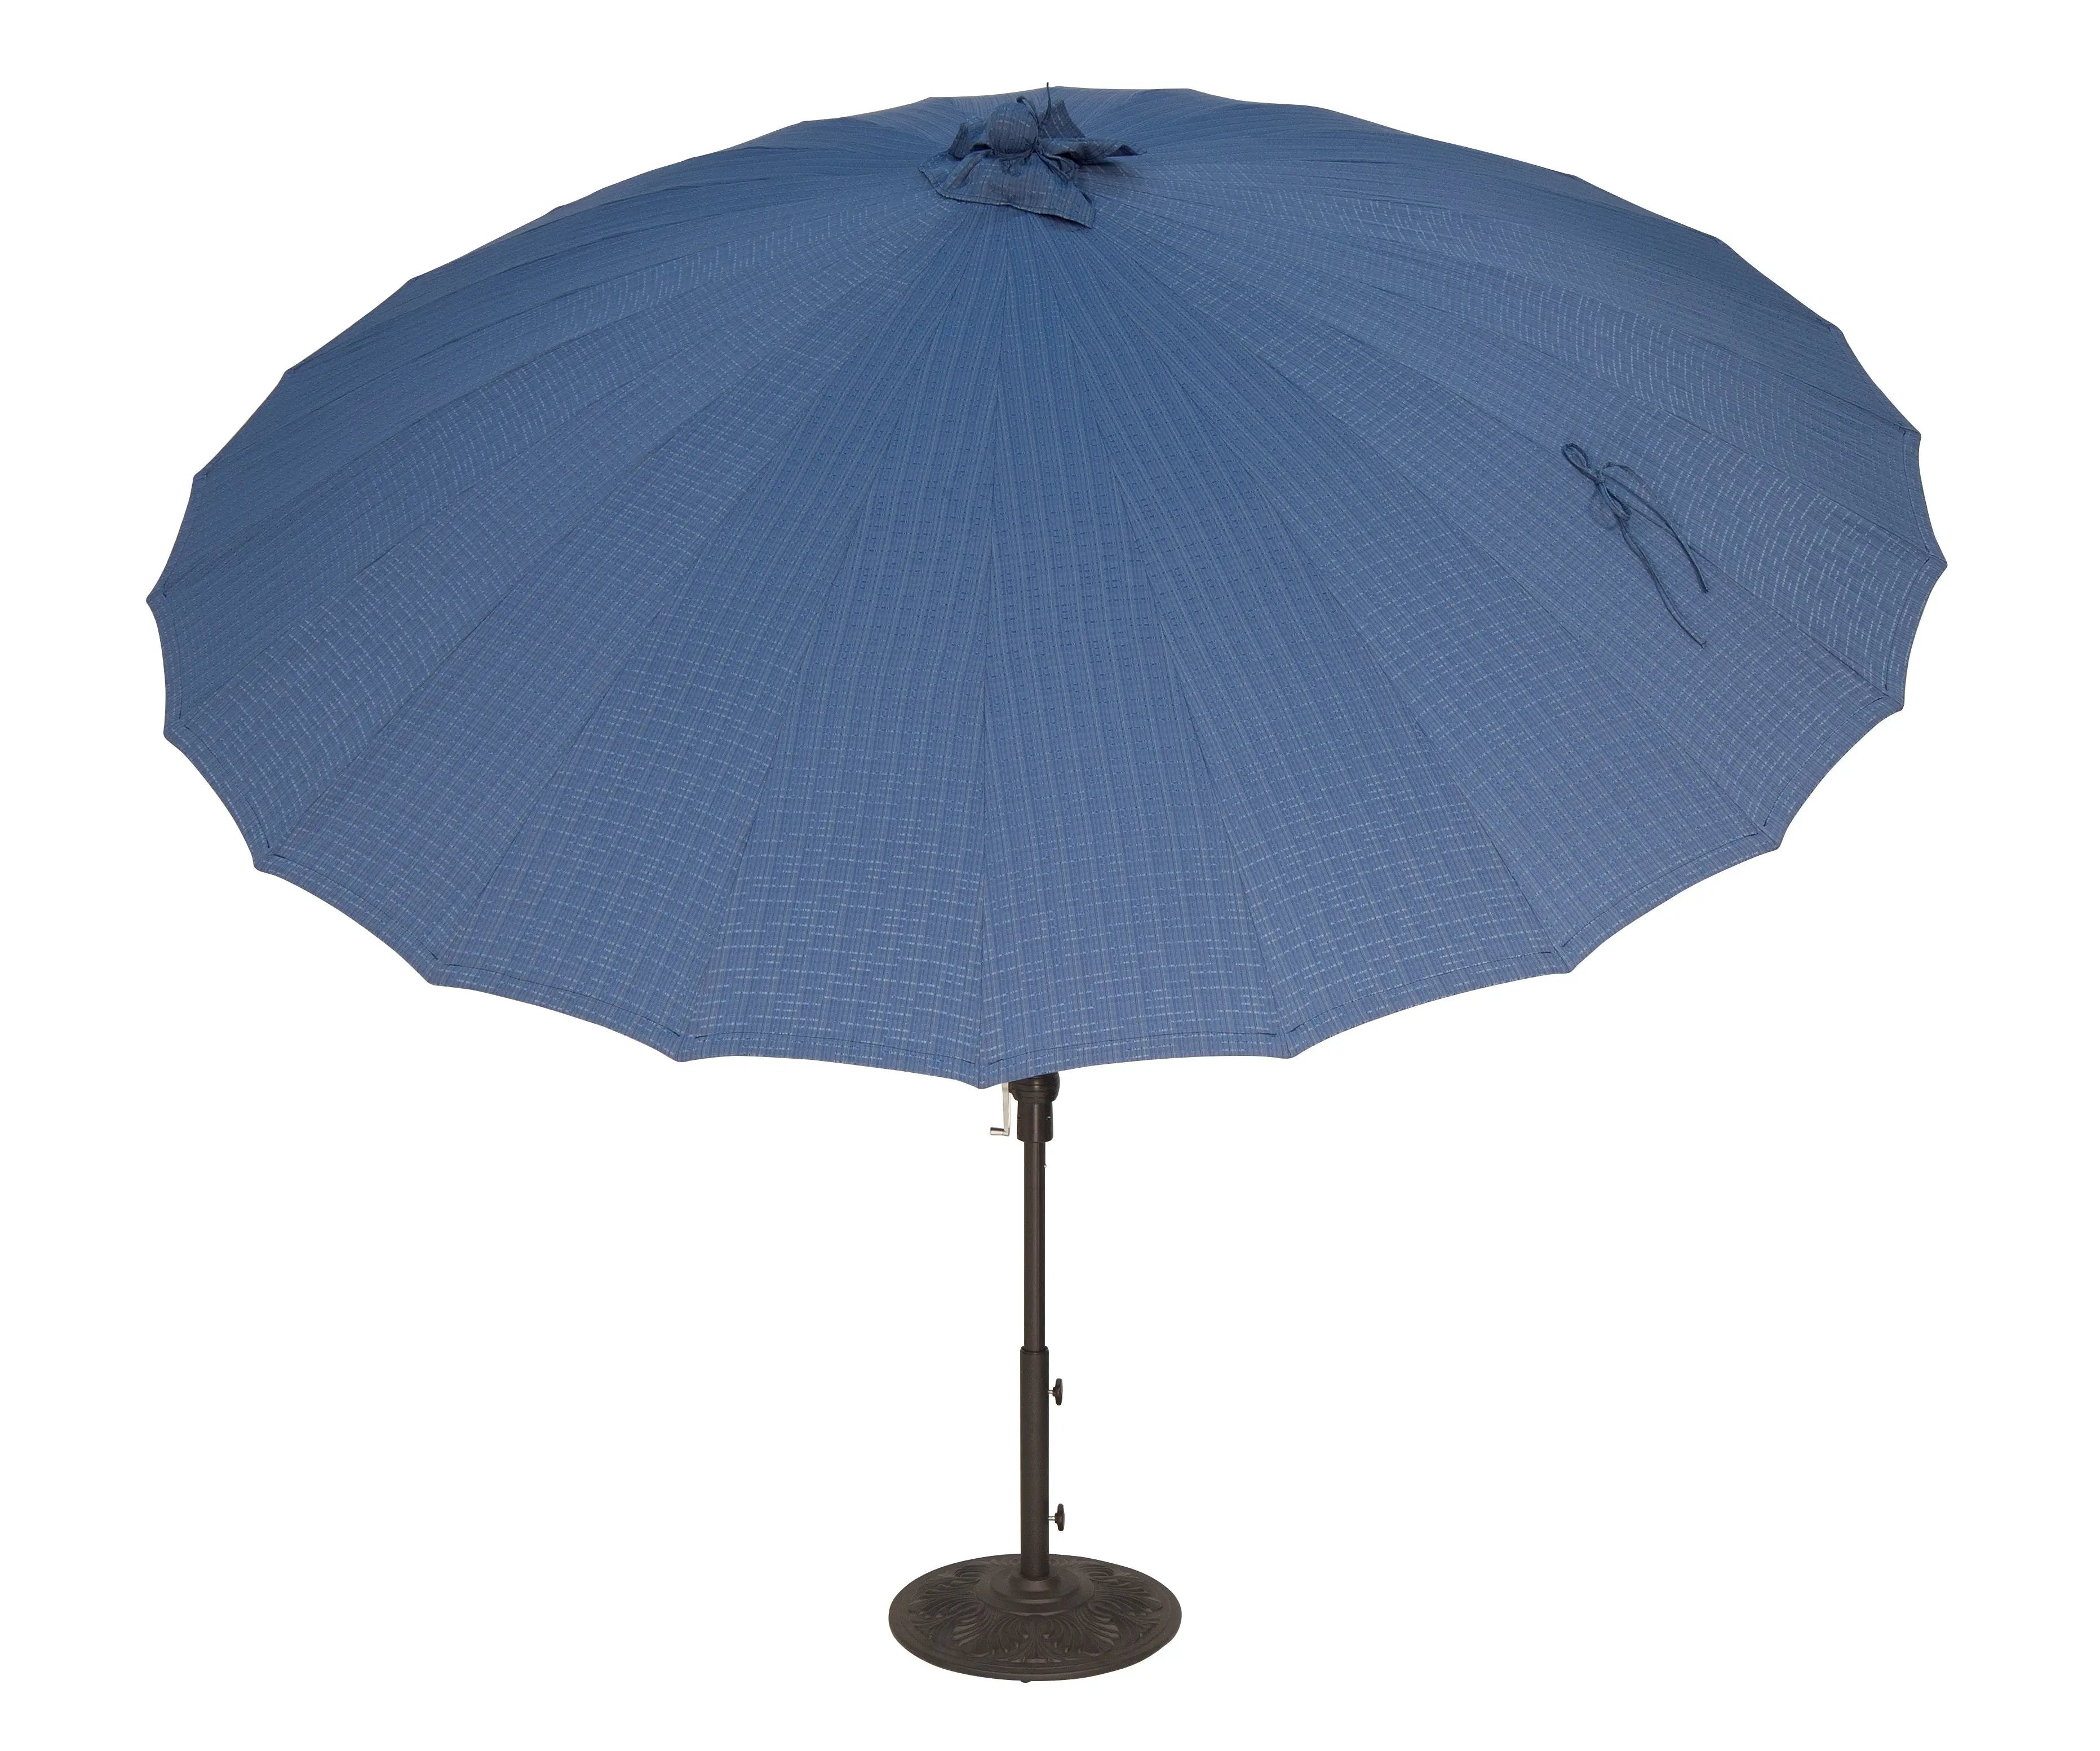 10' SHANGHAI Collar Tilt Umbrella by Treasure Garden